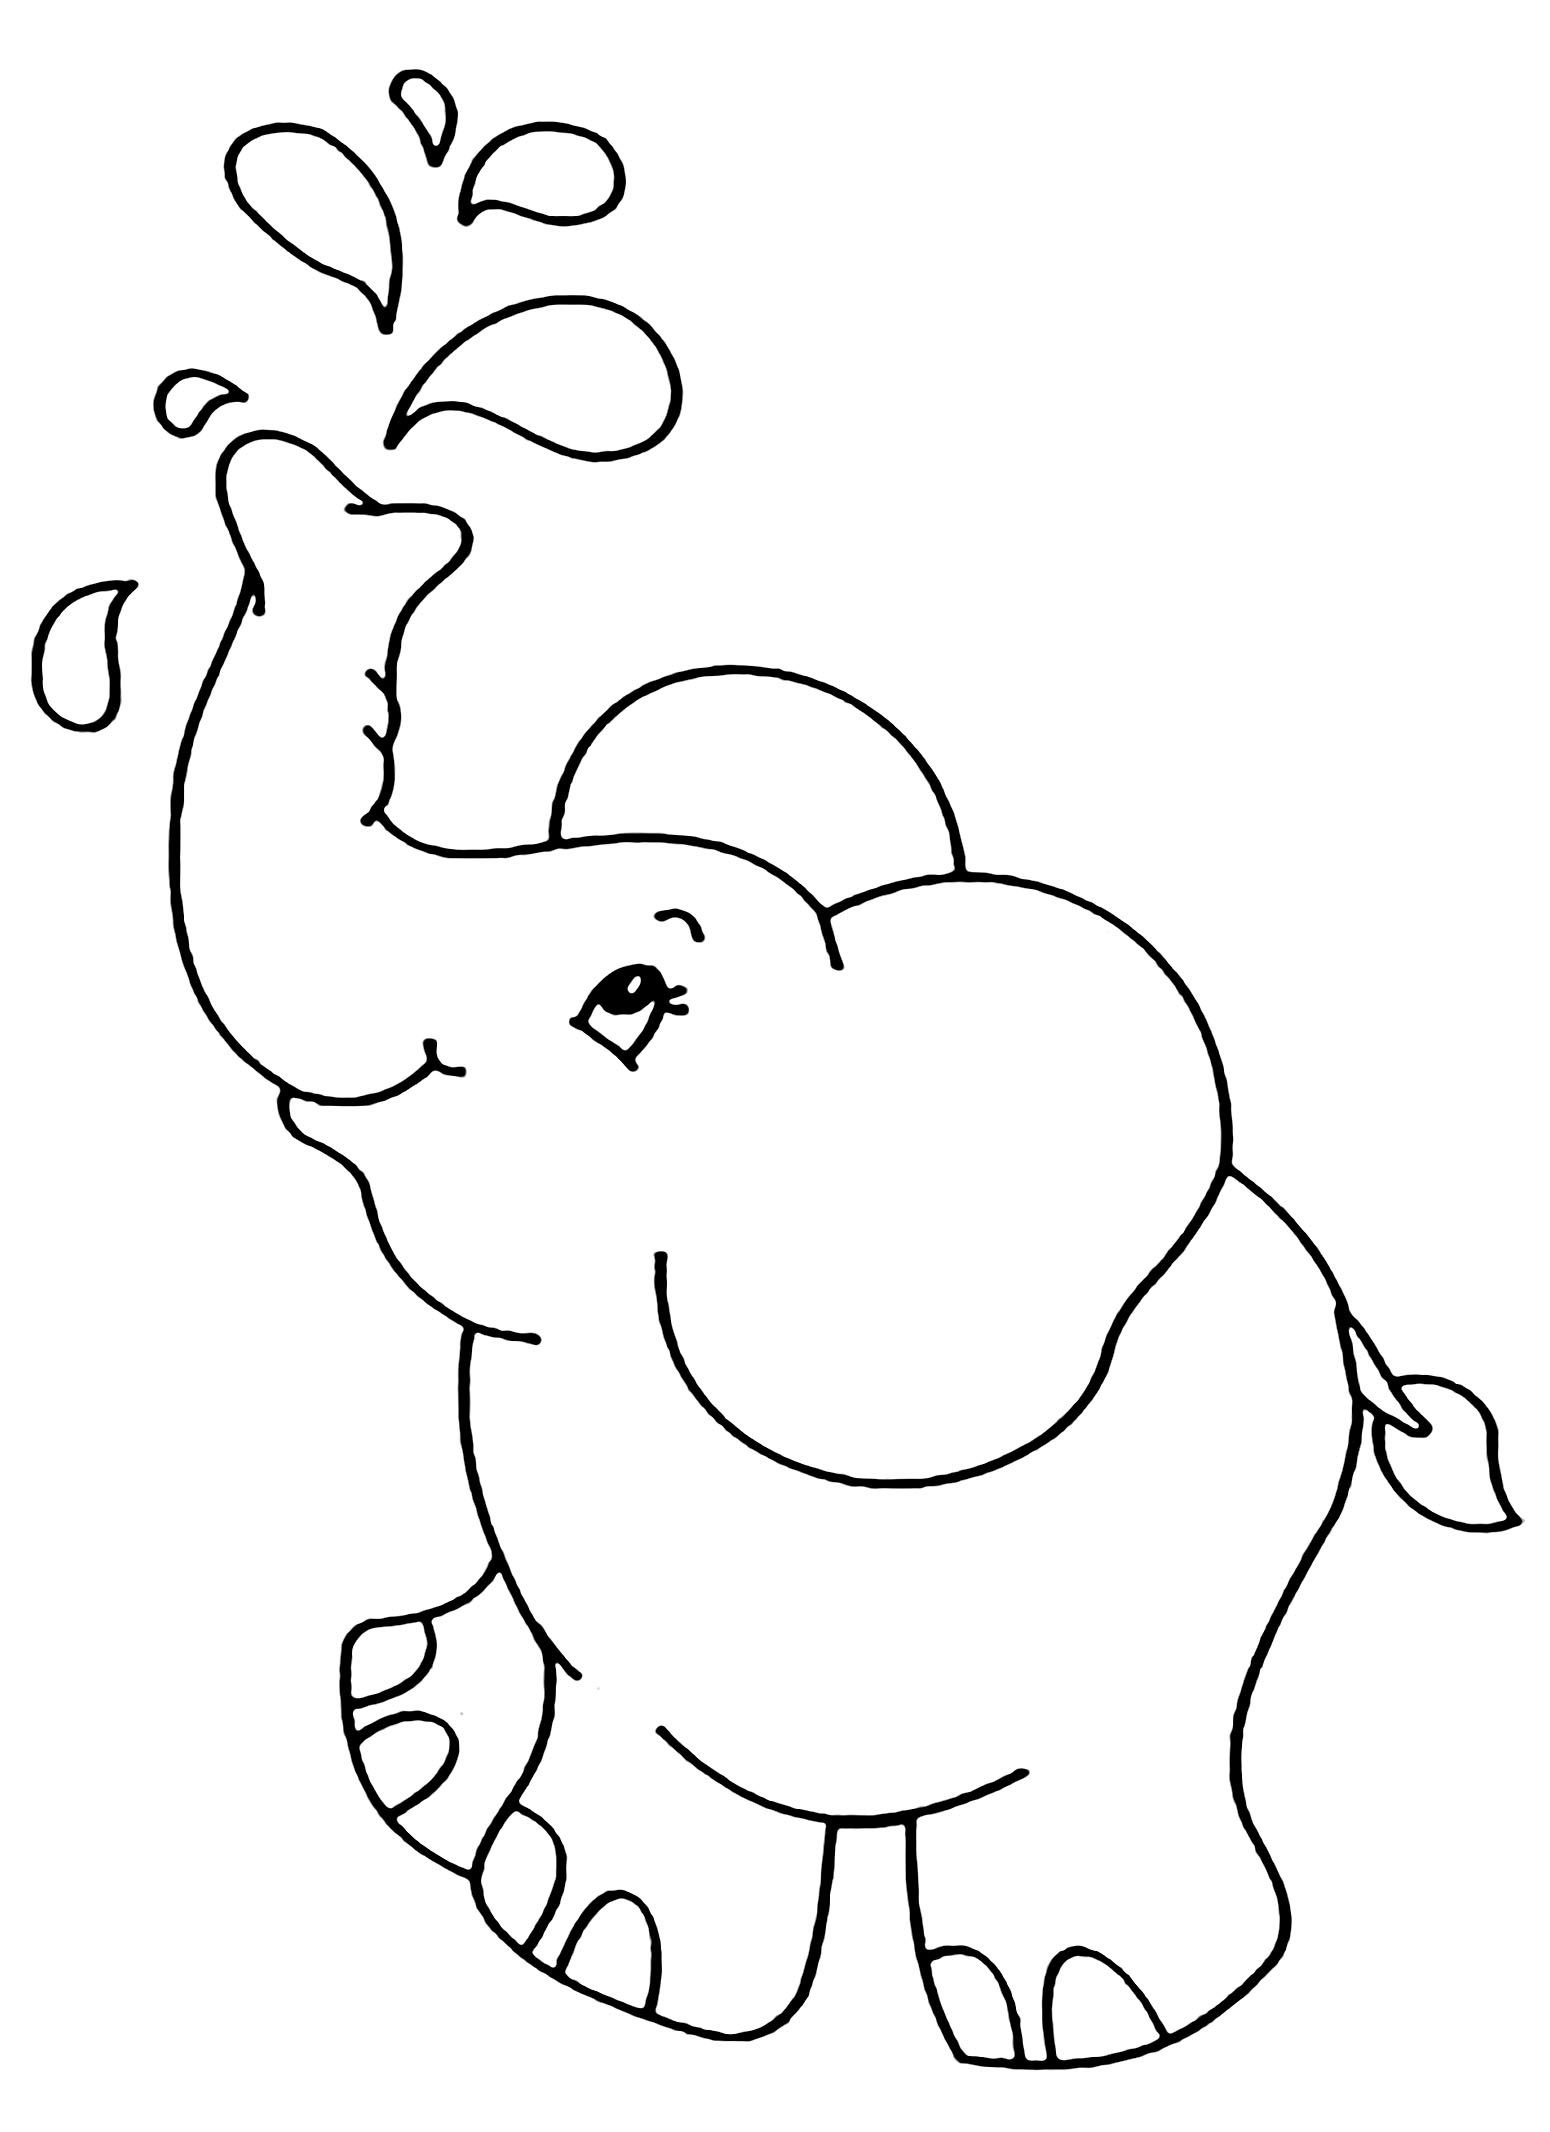 Elephants free to color for kids Elephants Kids Coloring